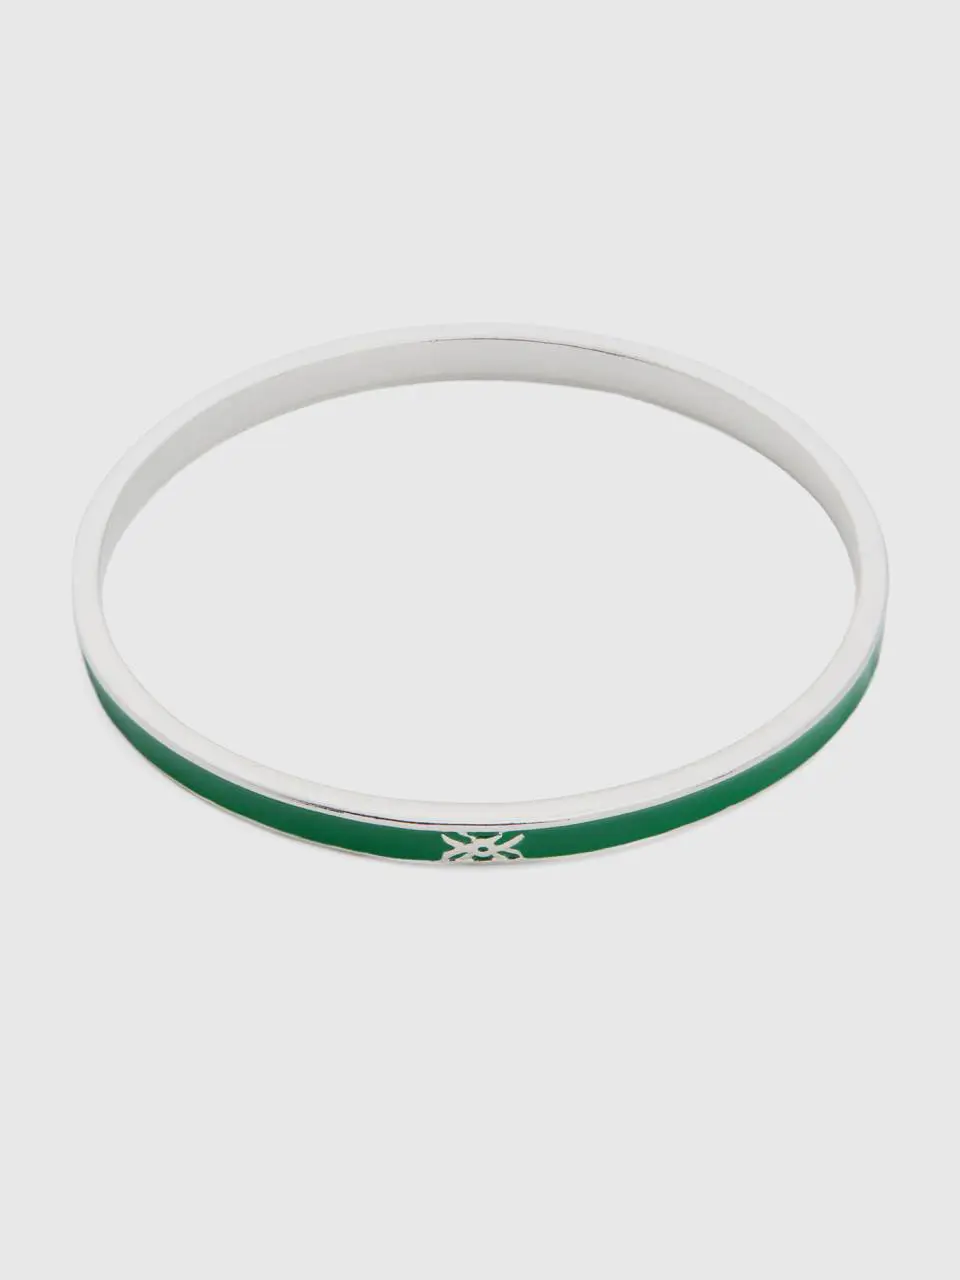 Benetton thin green bangle bracelet. 1